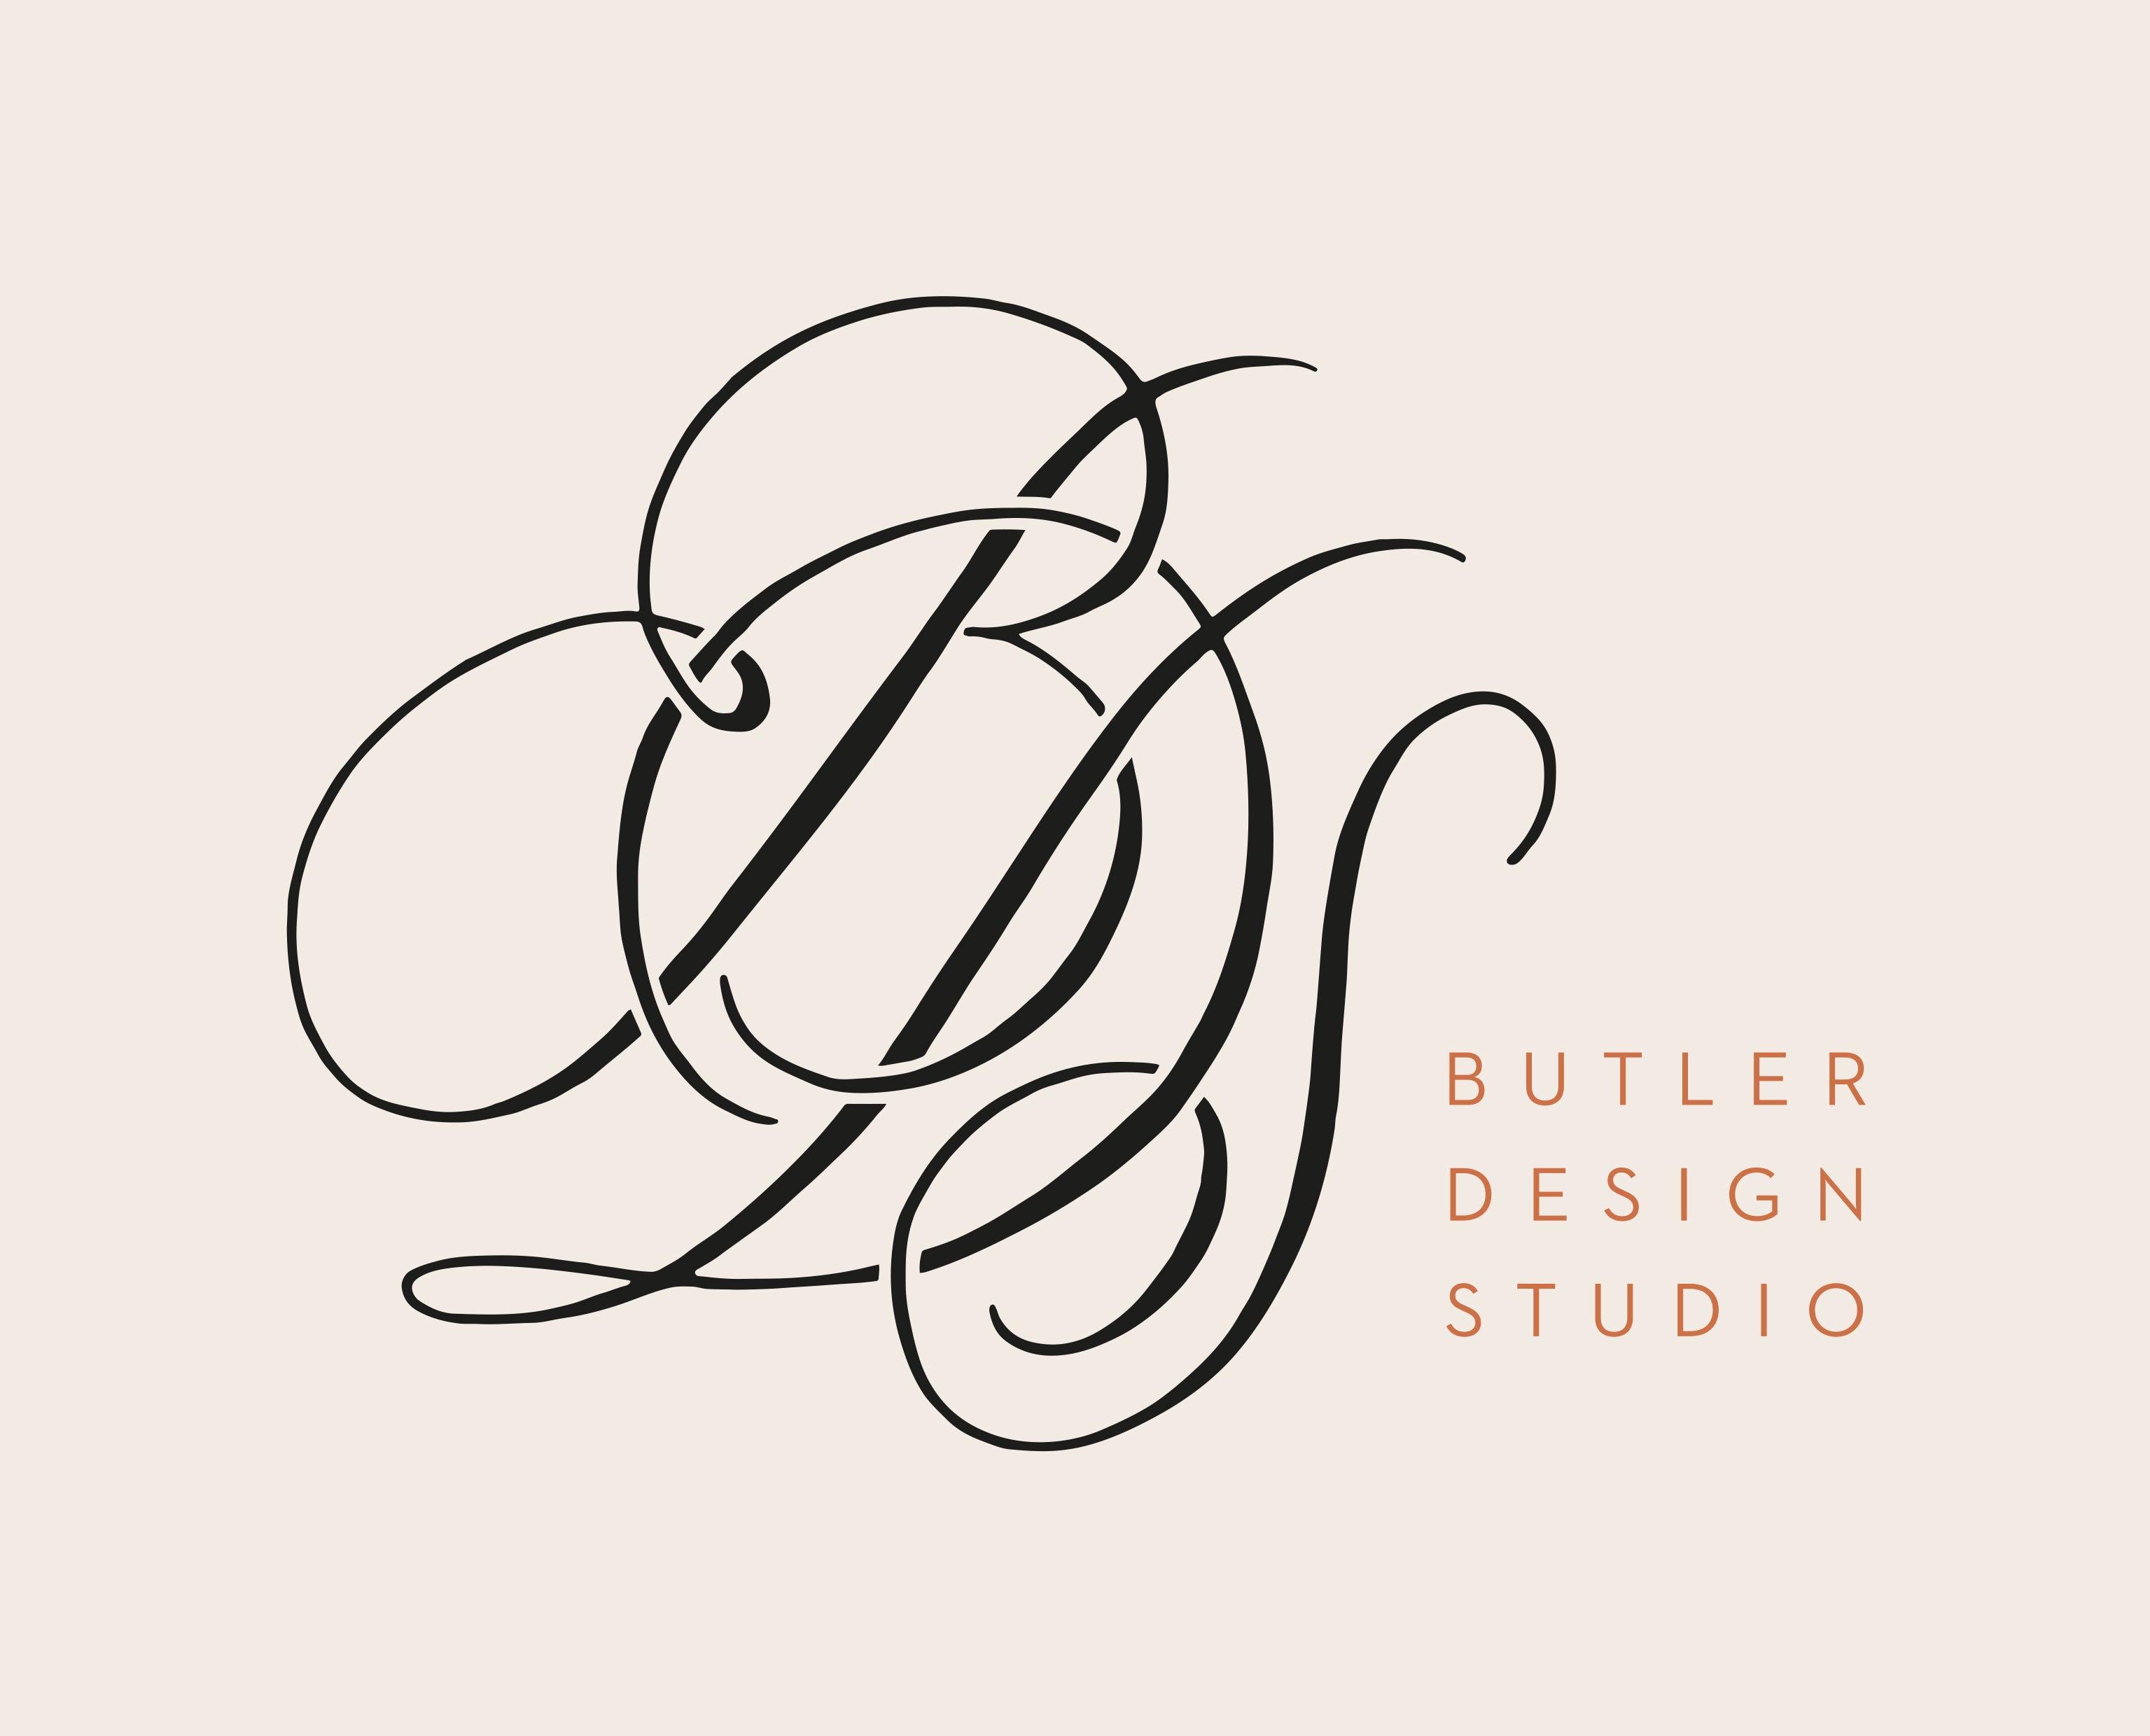 Butler Design Studio logo with clean BDS monogram and copper sans serif lettering